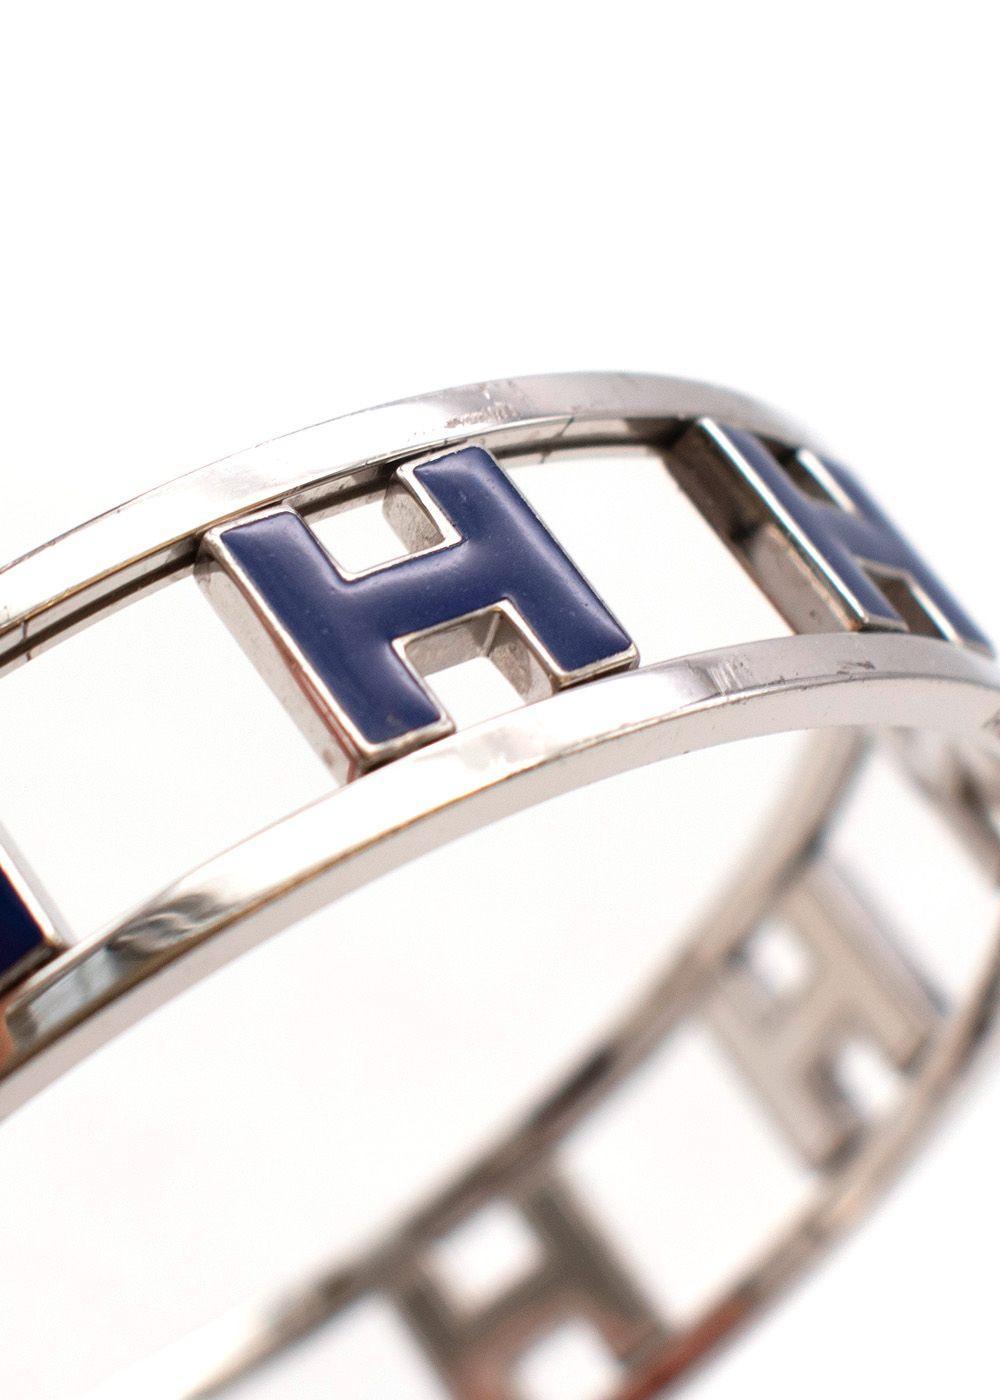 Hermes palladium plated metal and blue enamel Rondo bracelet

H logo rotating. Palladium. 
Comes with dustbag